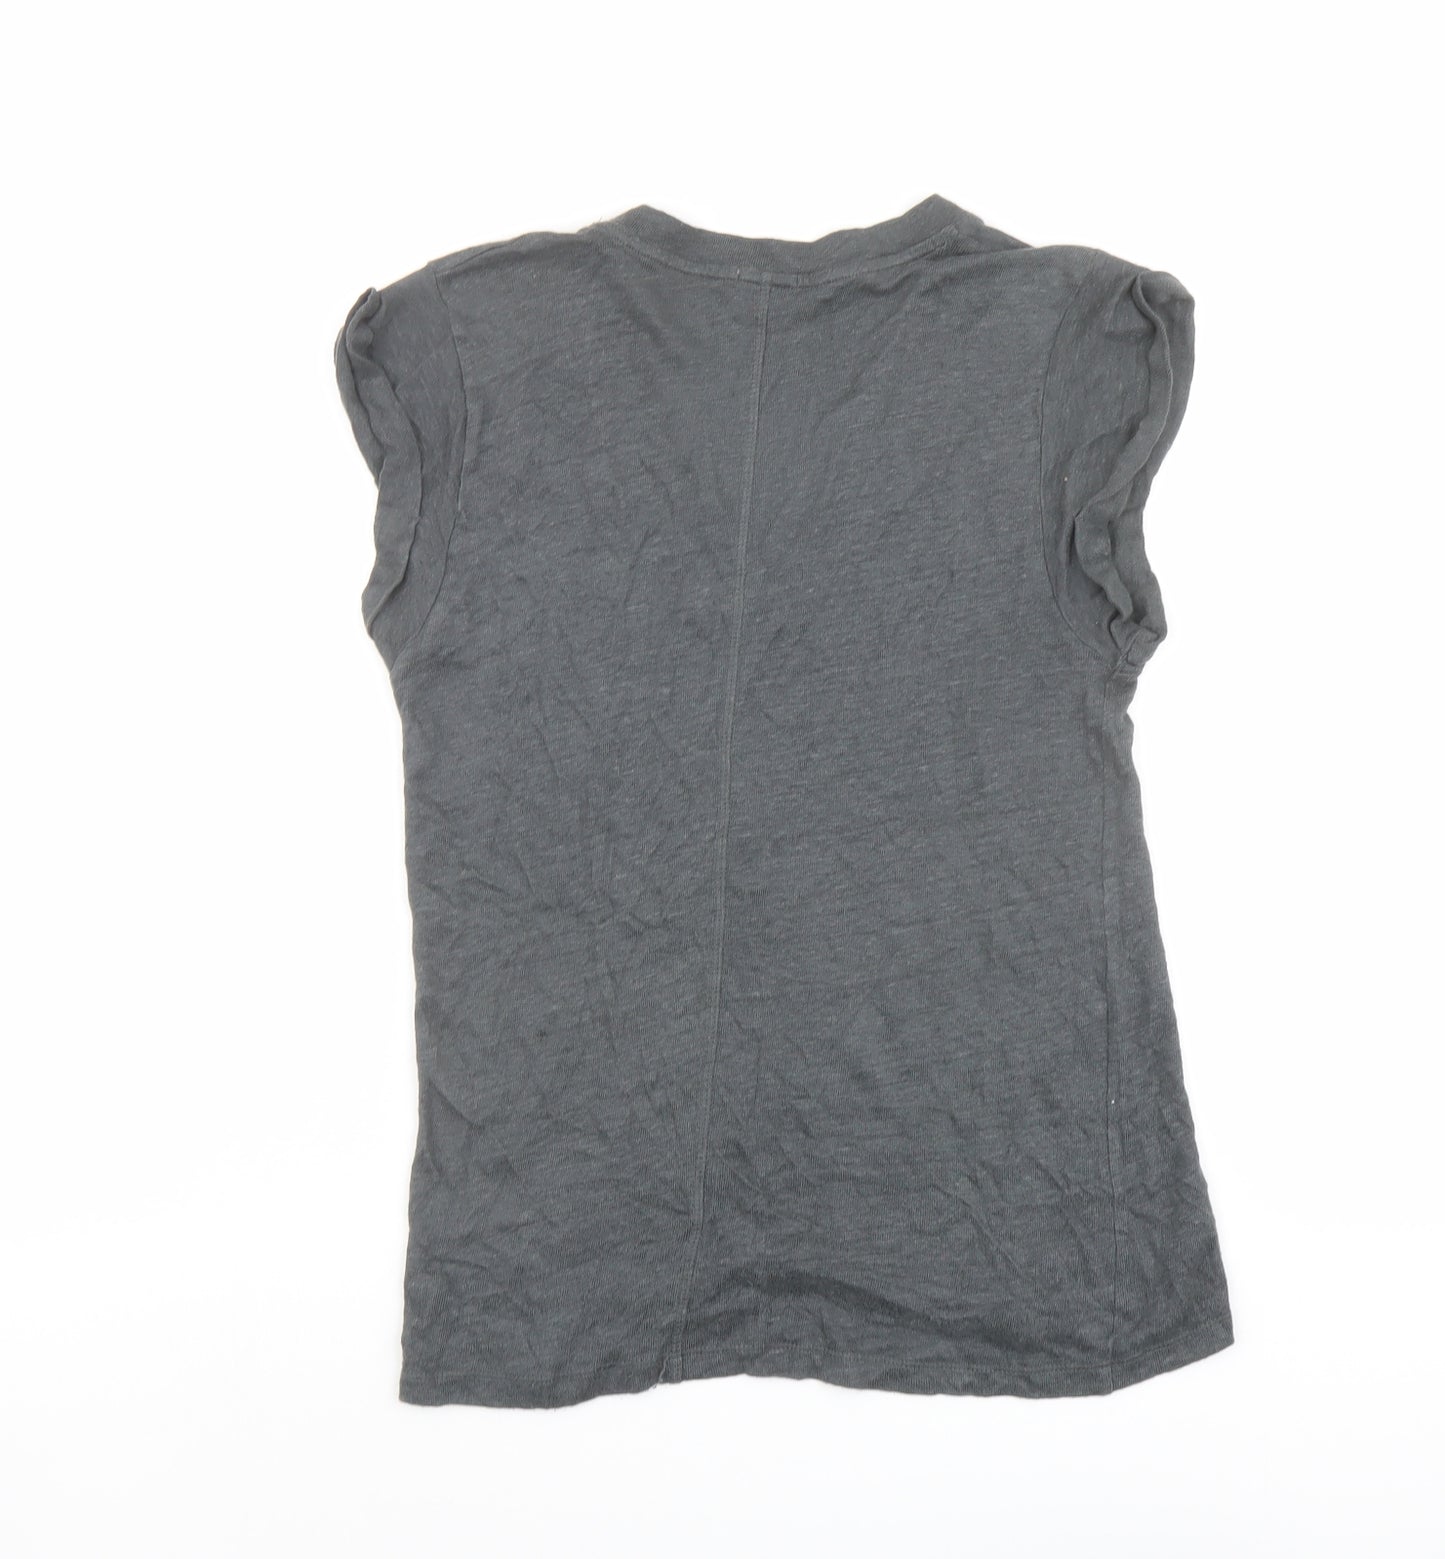 Jigsaw Womens Grey Linen Basic T-Shirt Size S V-Neck